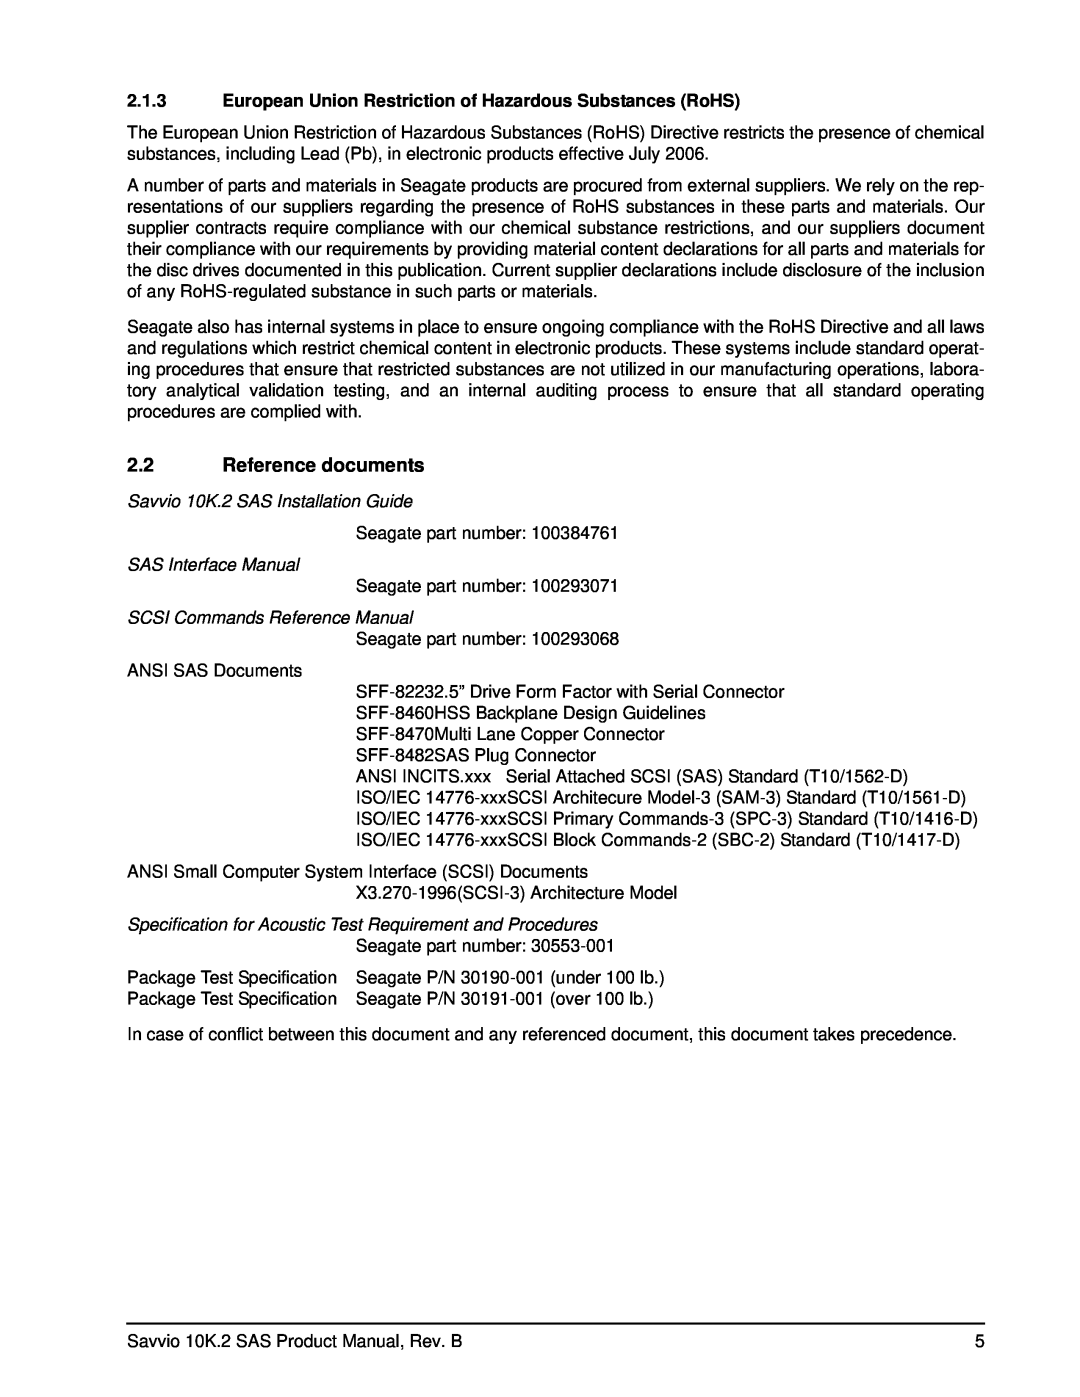 Seagate ST9146802SS Reference documents, European Union Restriction of Hazardous Substances RoHS, SAS Interface Manual 